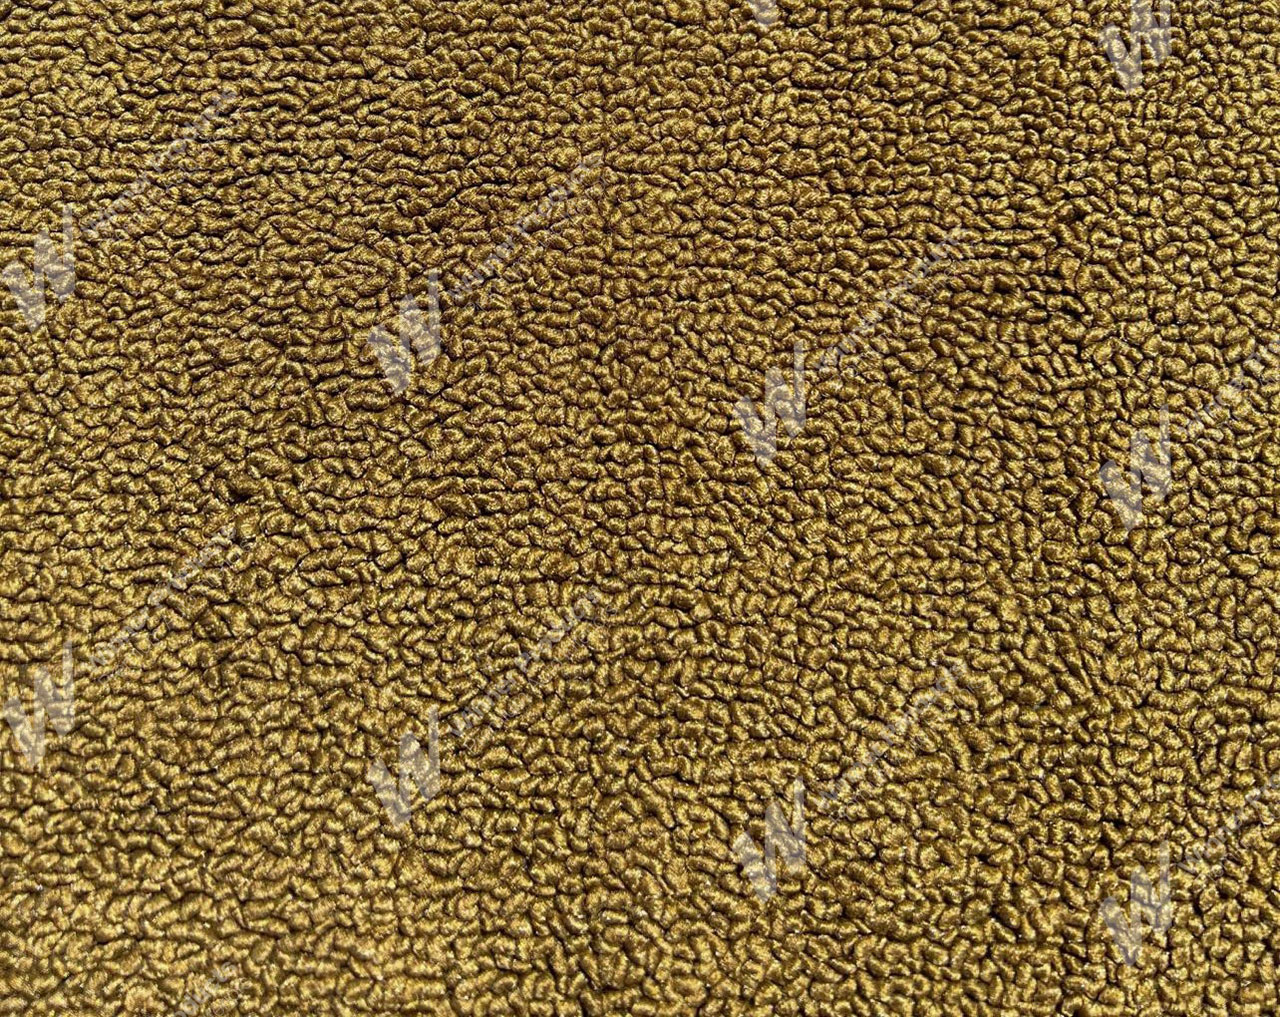 Holden Kingswood HT Kingswood Wagon 11E Antique Gold Carpet (Image 1 of 1)